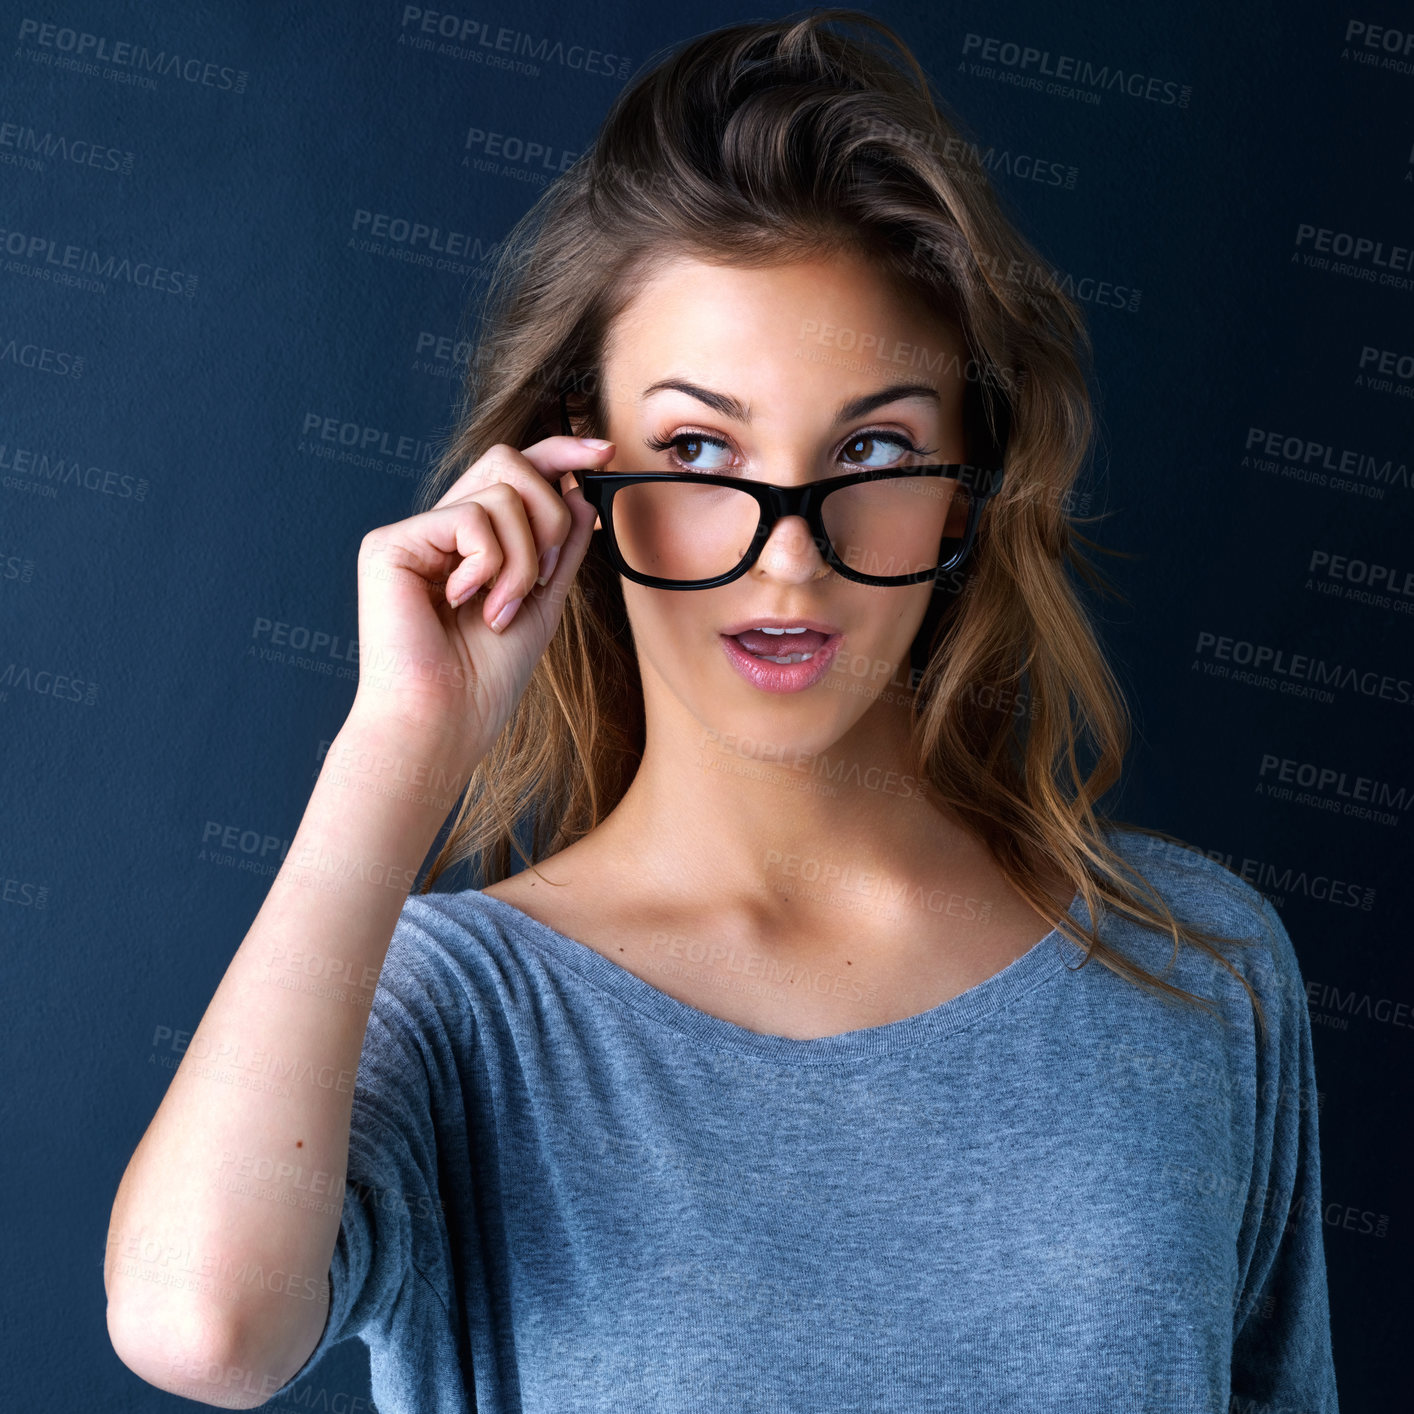 Buy stock photo Studio shot of a cute teenage girl in glasses raising her eyebrows in surprise posing against a dark background